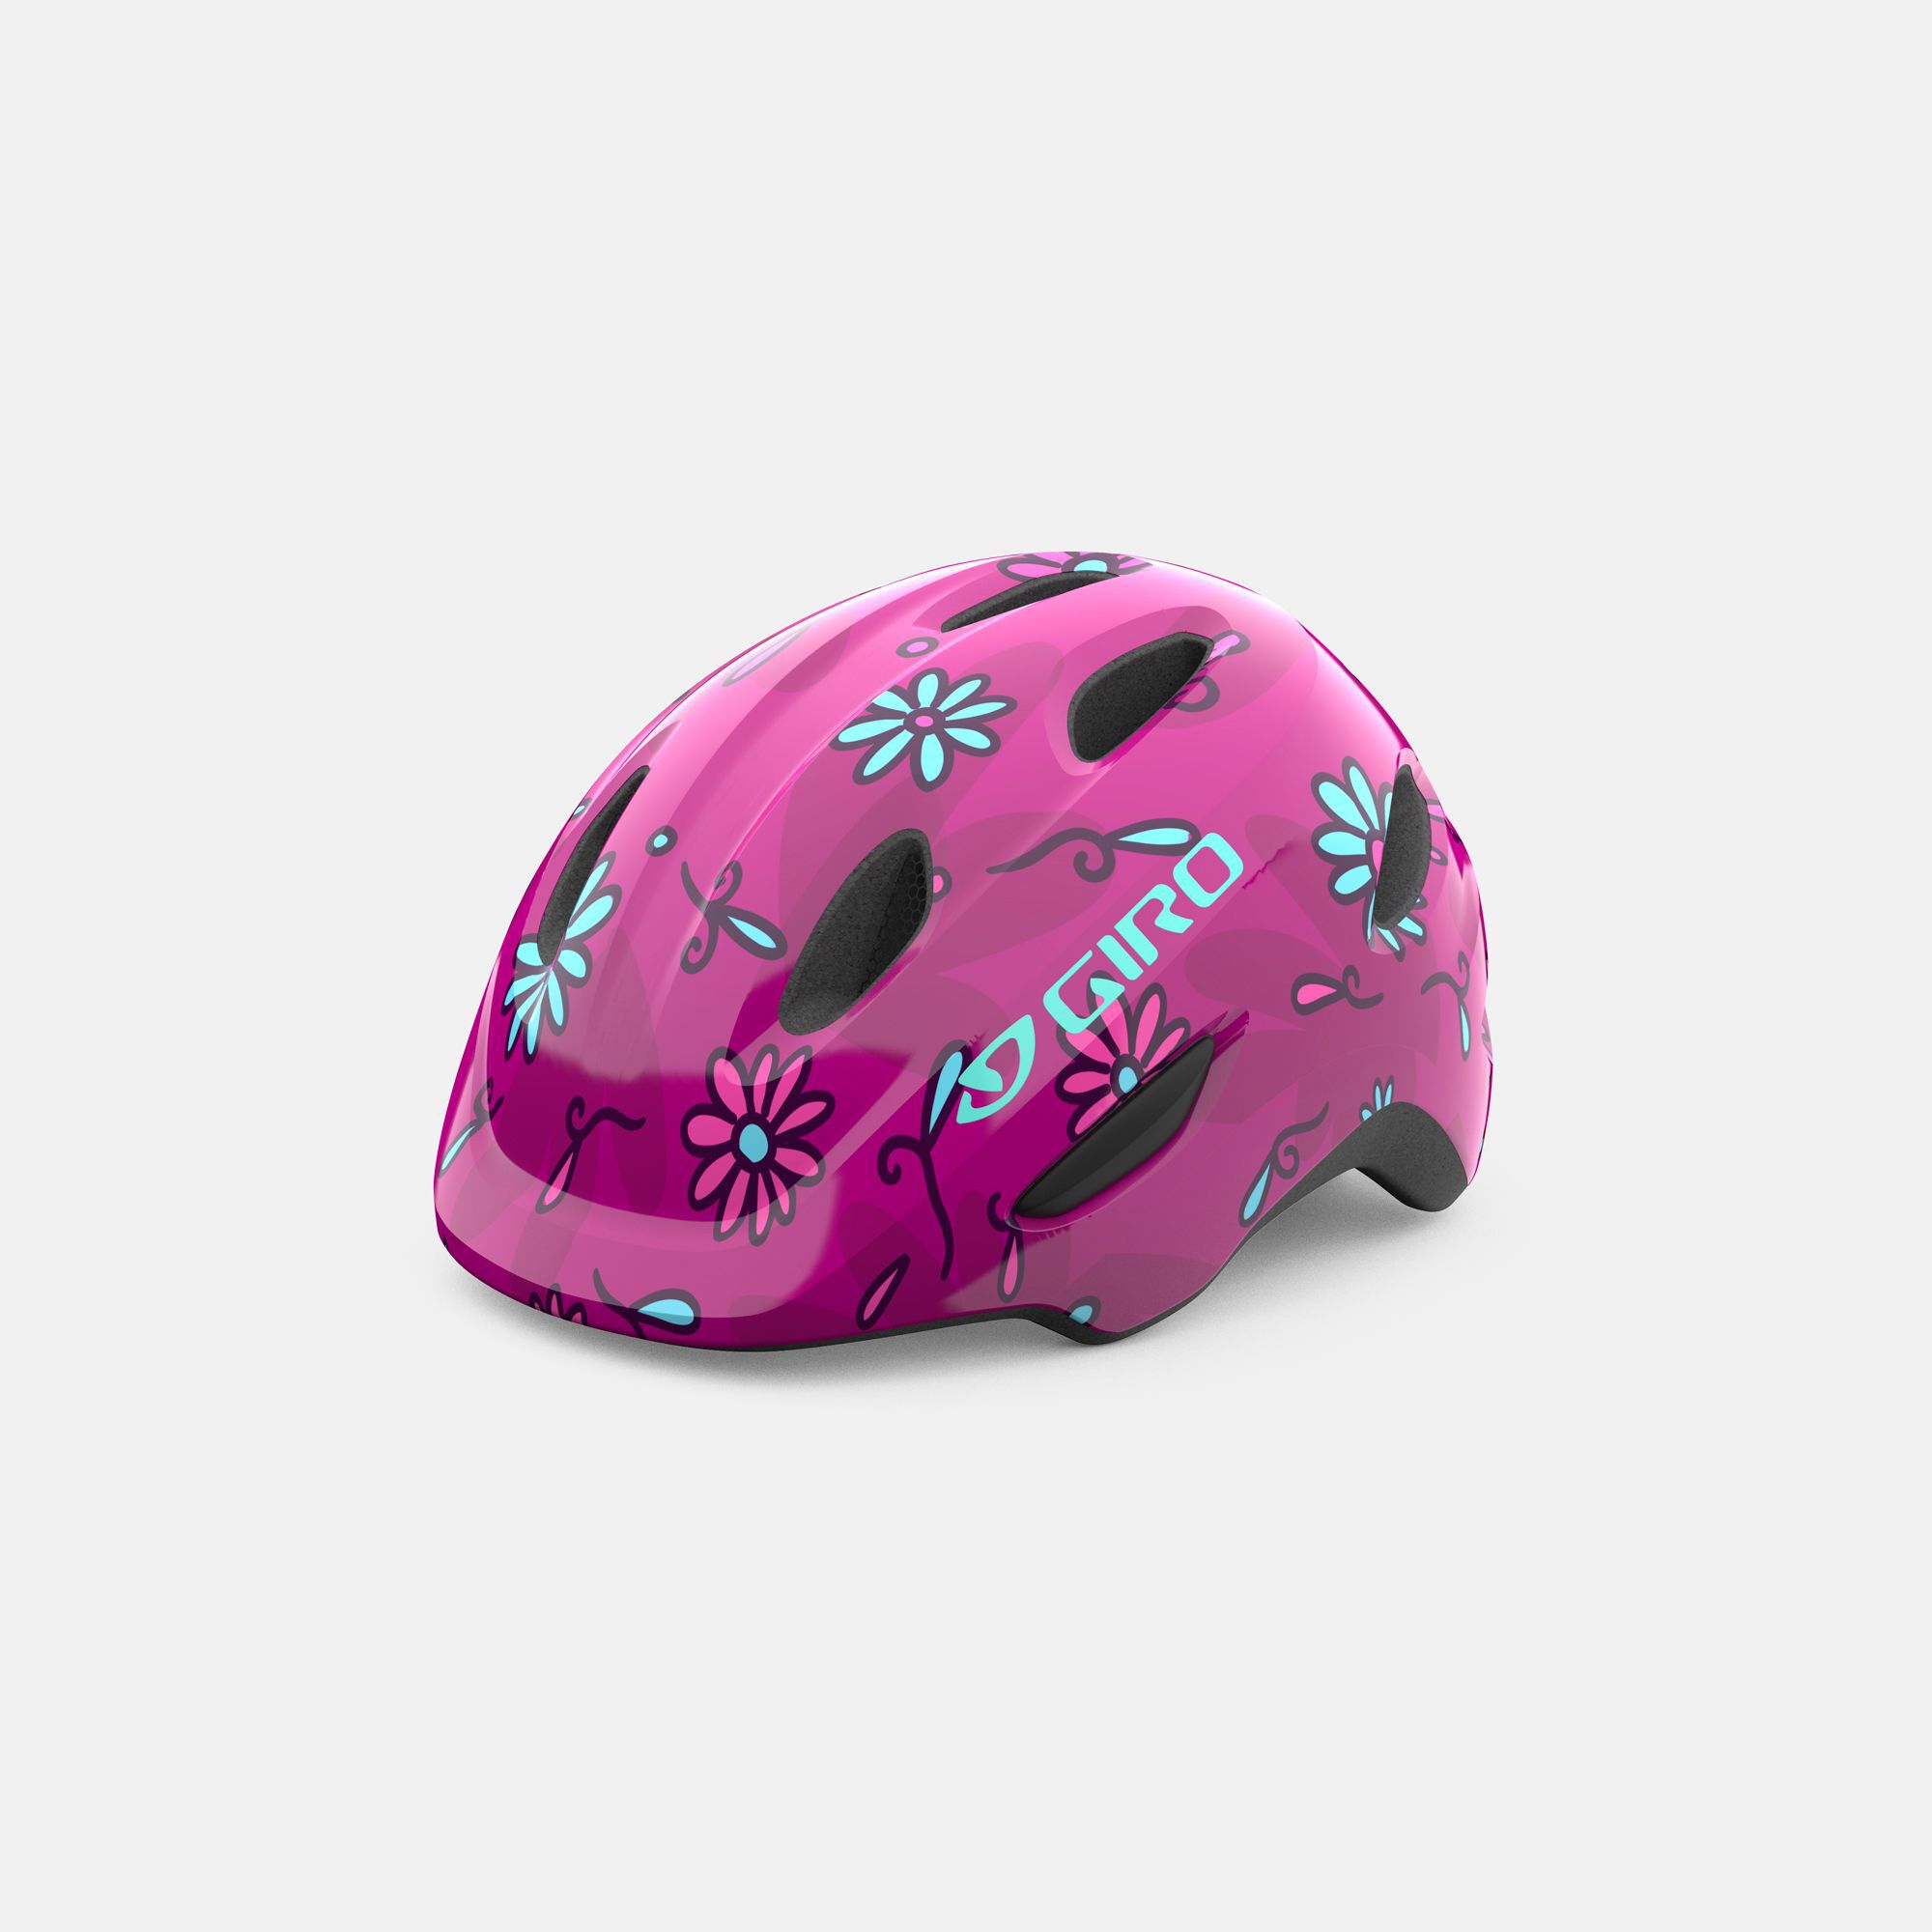 Giro Scamp Kinder Fahrrad Helm 2020 